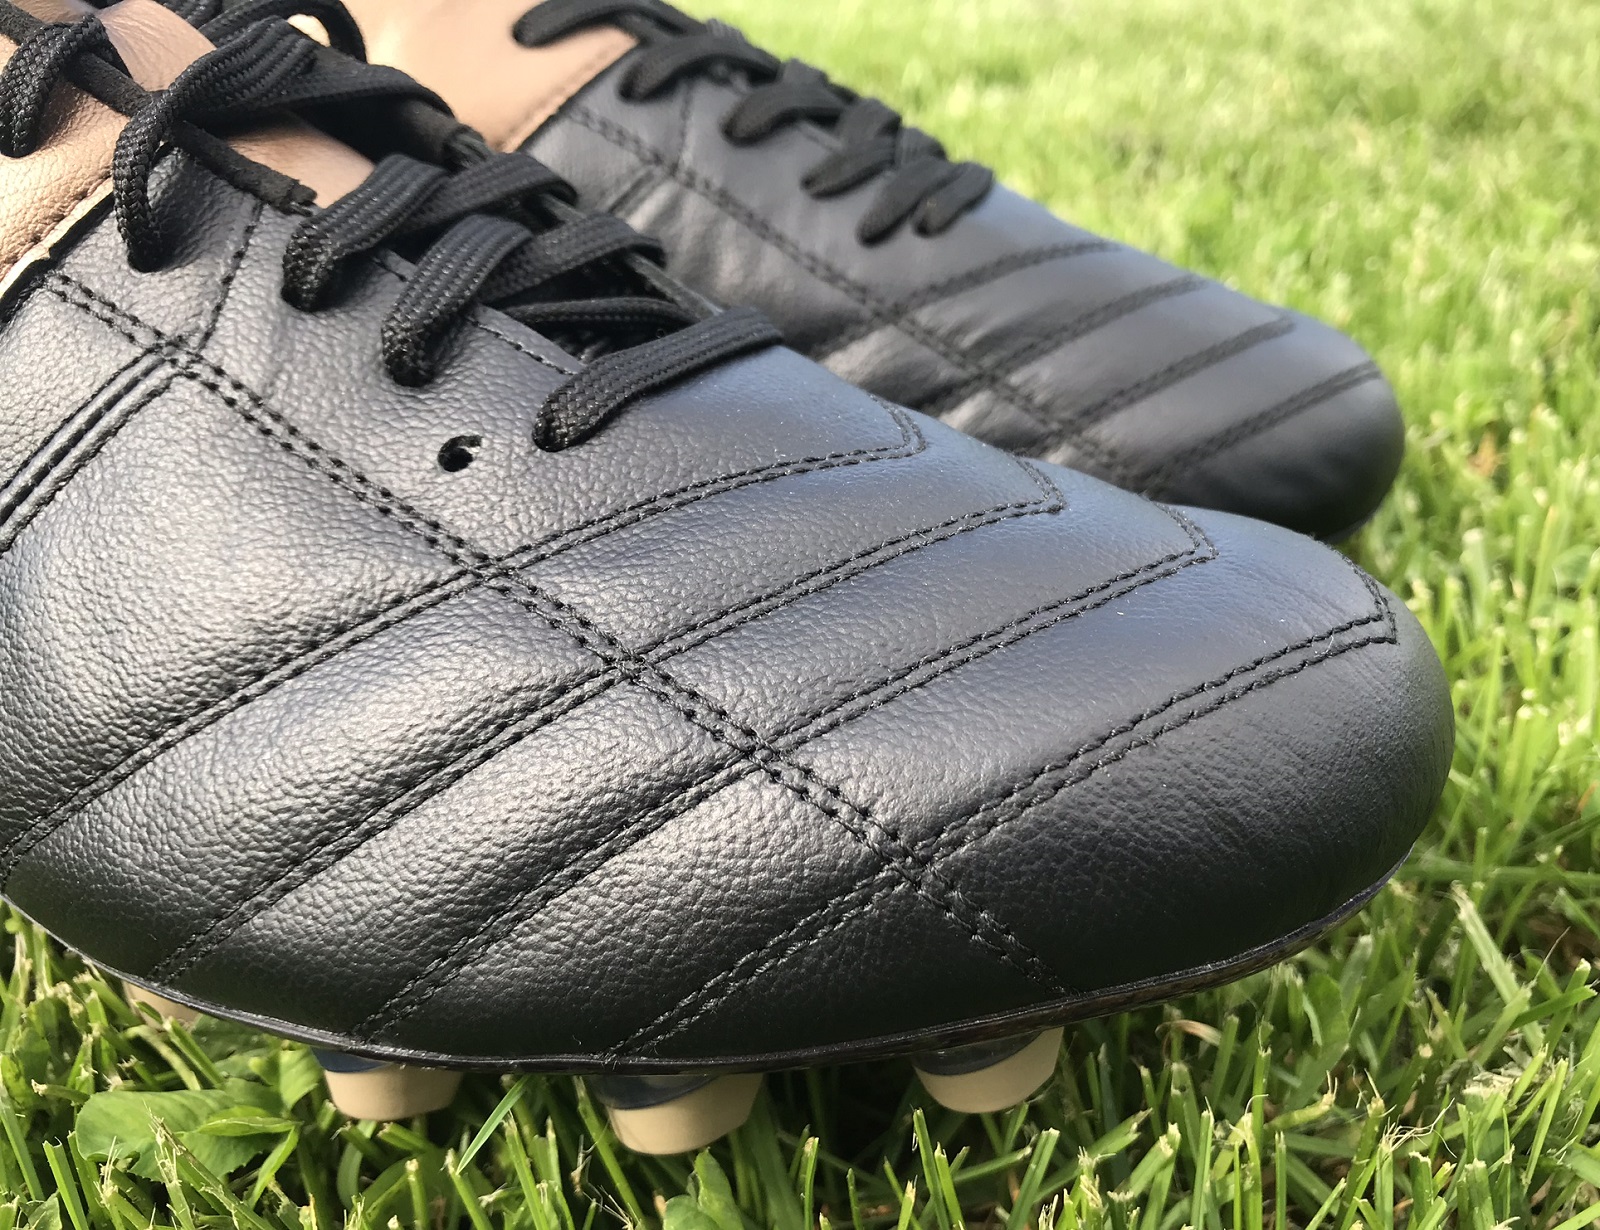 Unozero Modelo 1.0 Released - New Brand, New Boot! - Soccer Cleats 101